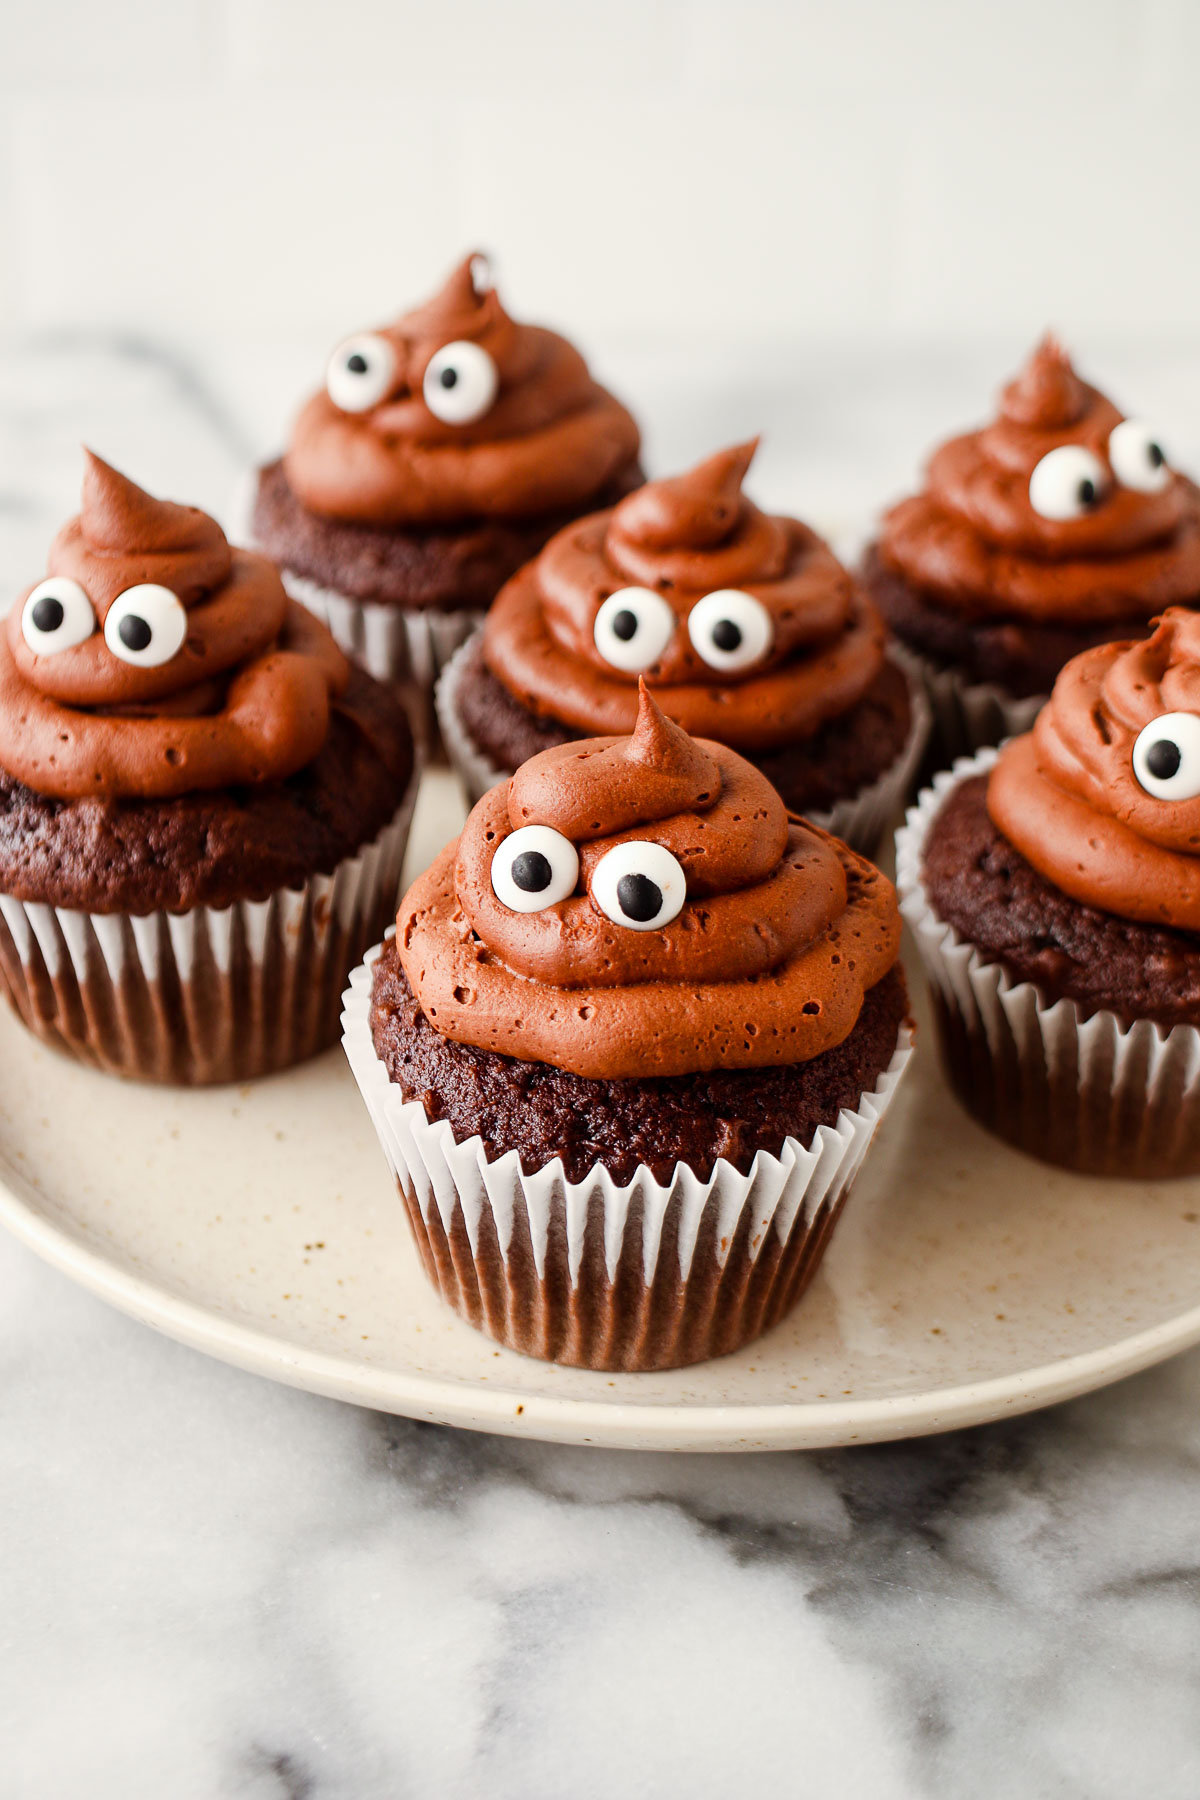 easy cupcake topper ideas: how to make poop emoji cupcakes